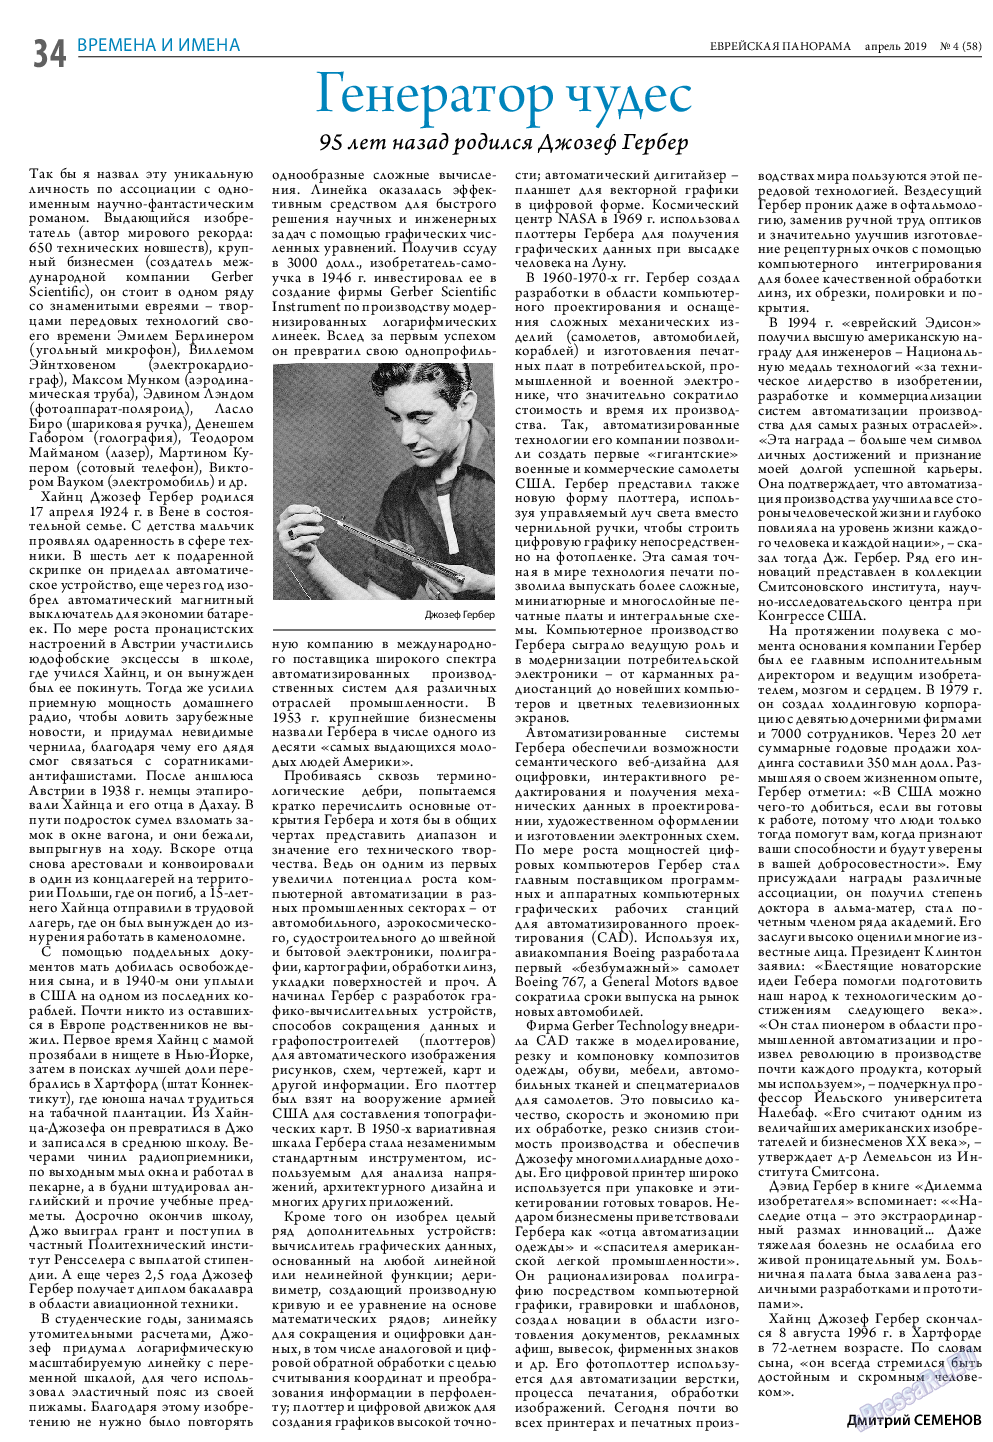 Еврейская панорама, газета. 2019 №4 стр.34